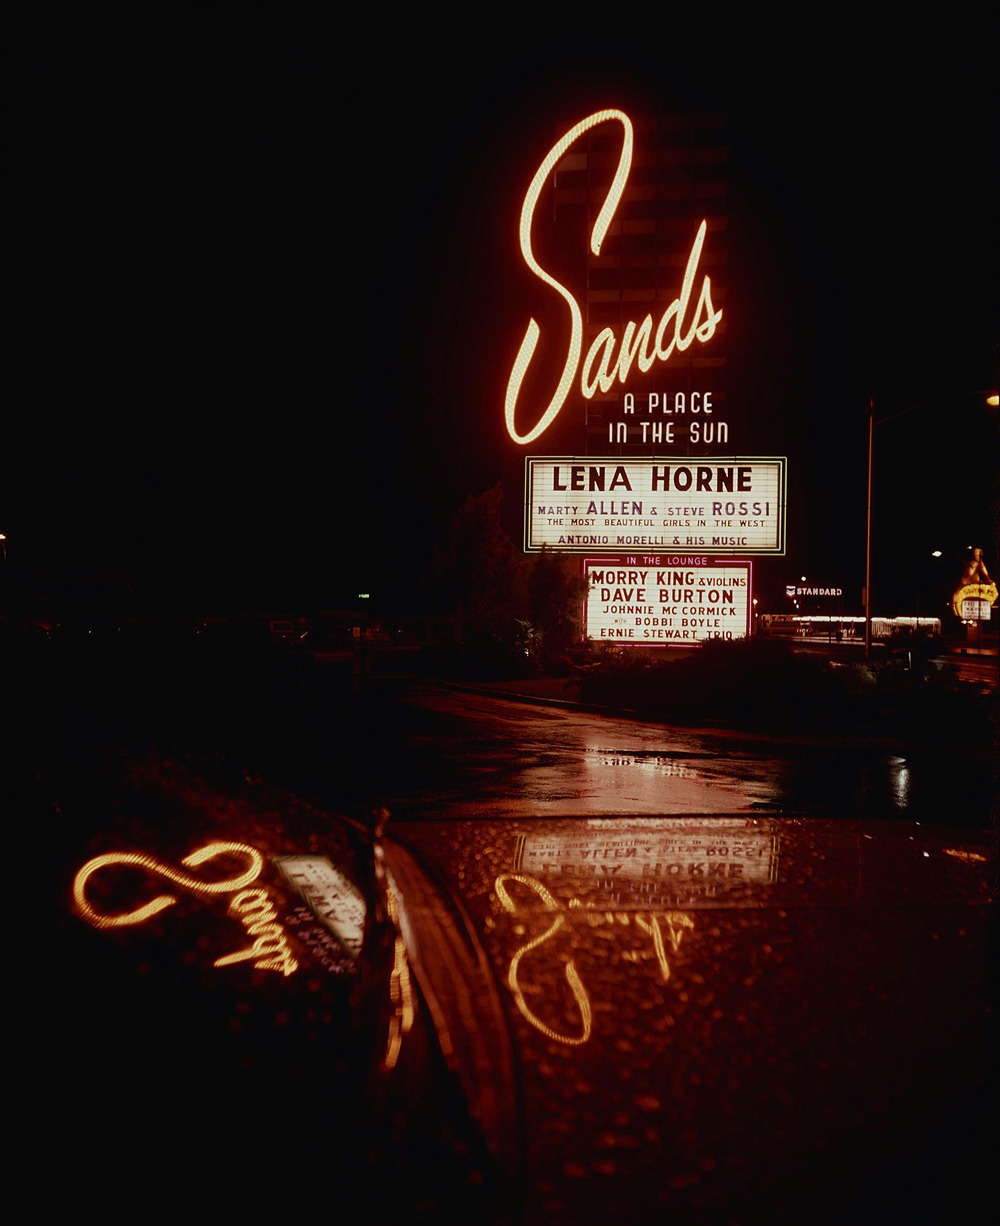 Sands Hotel and Casino - Las Vegas, Nevada U.S.A. - November 1961